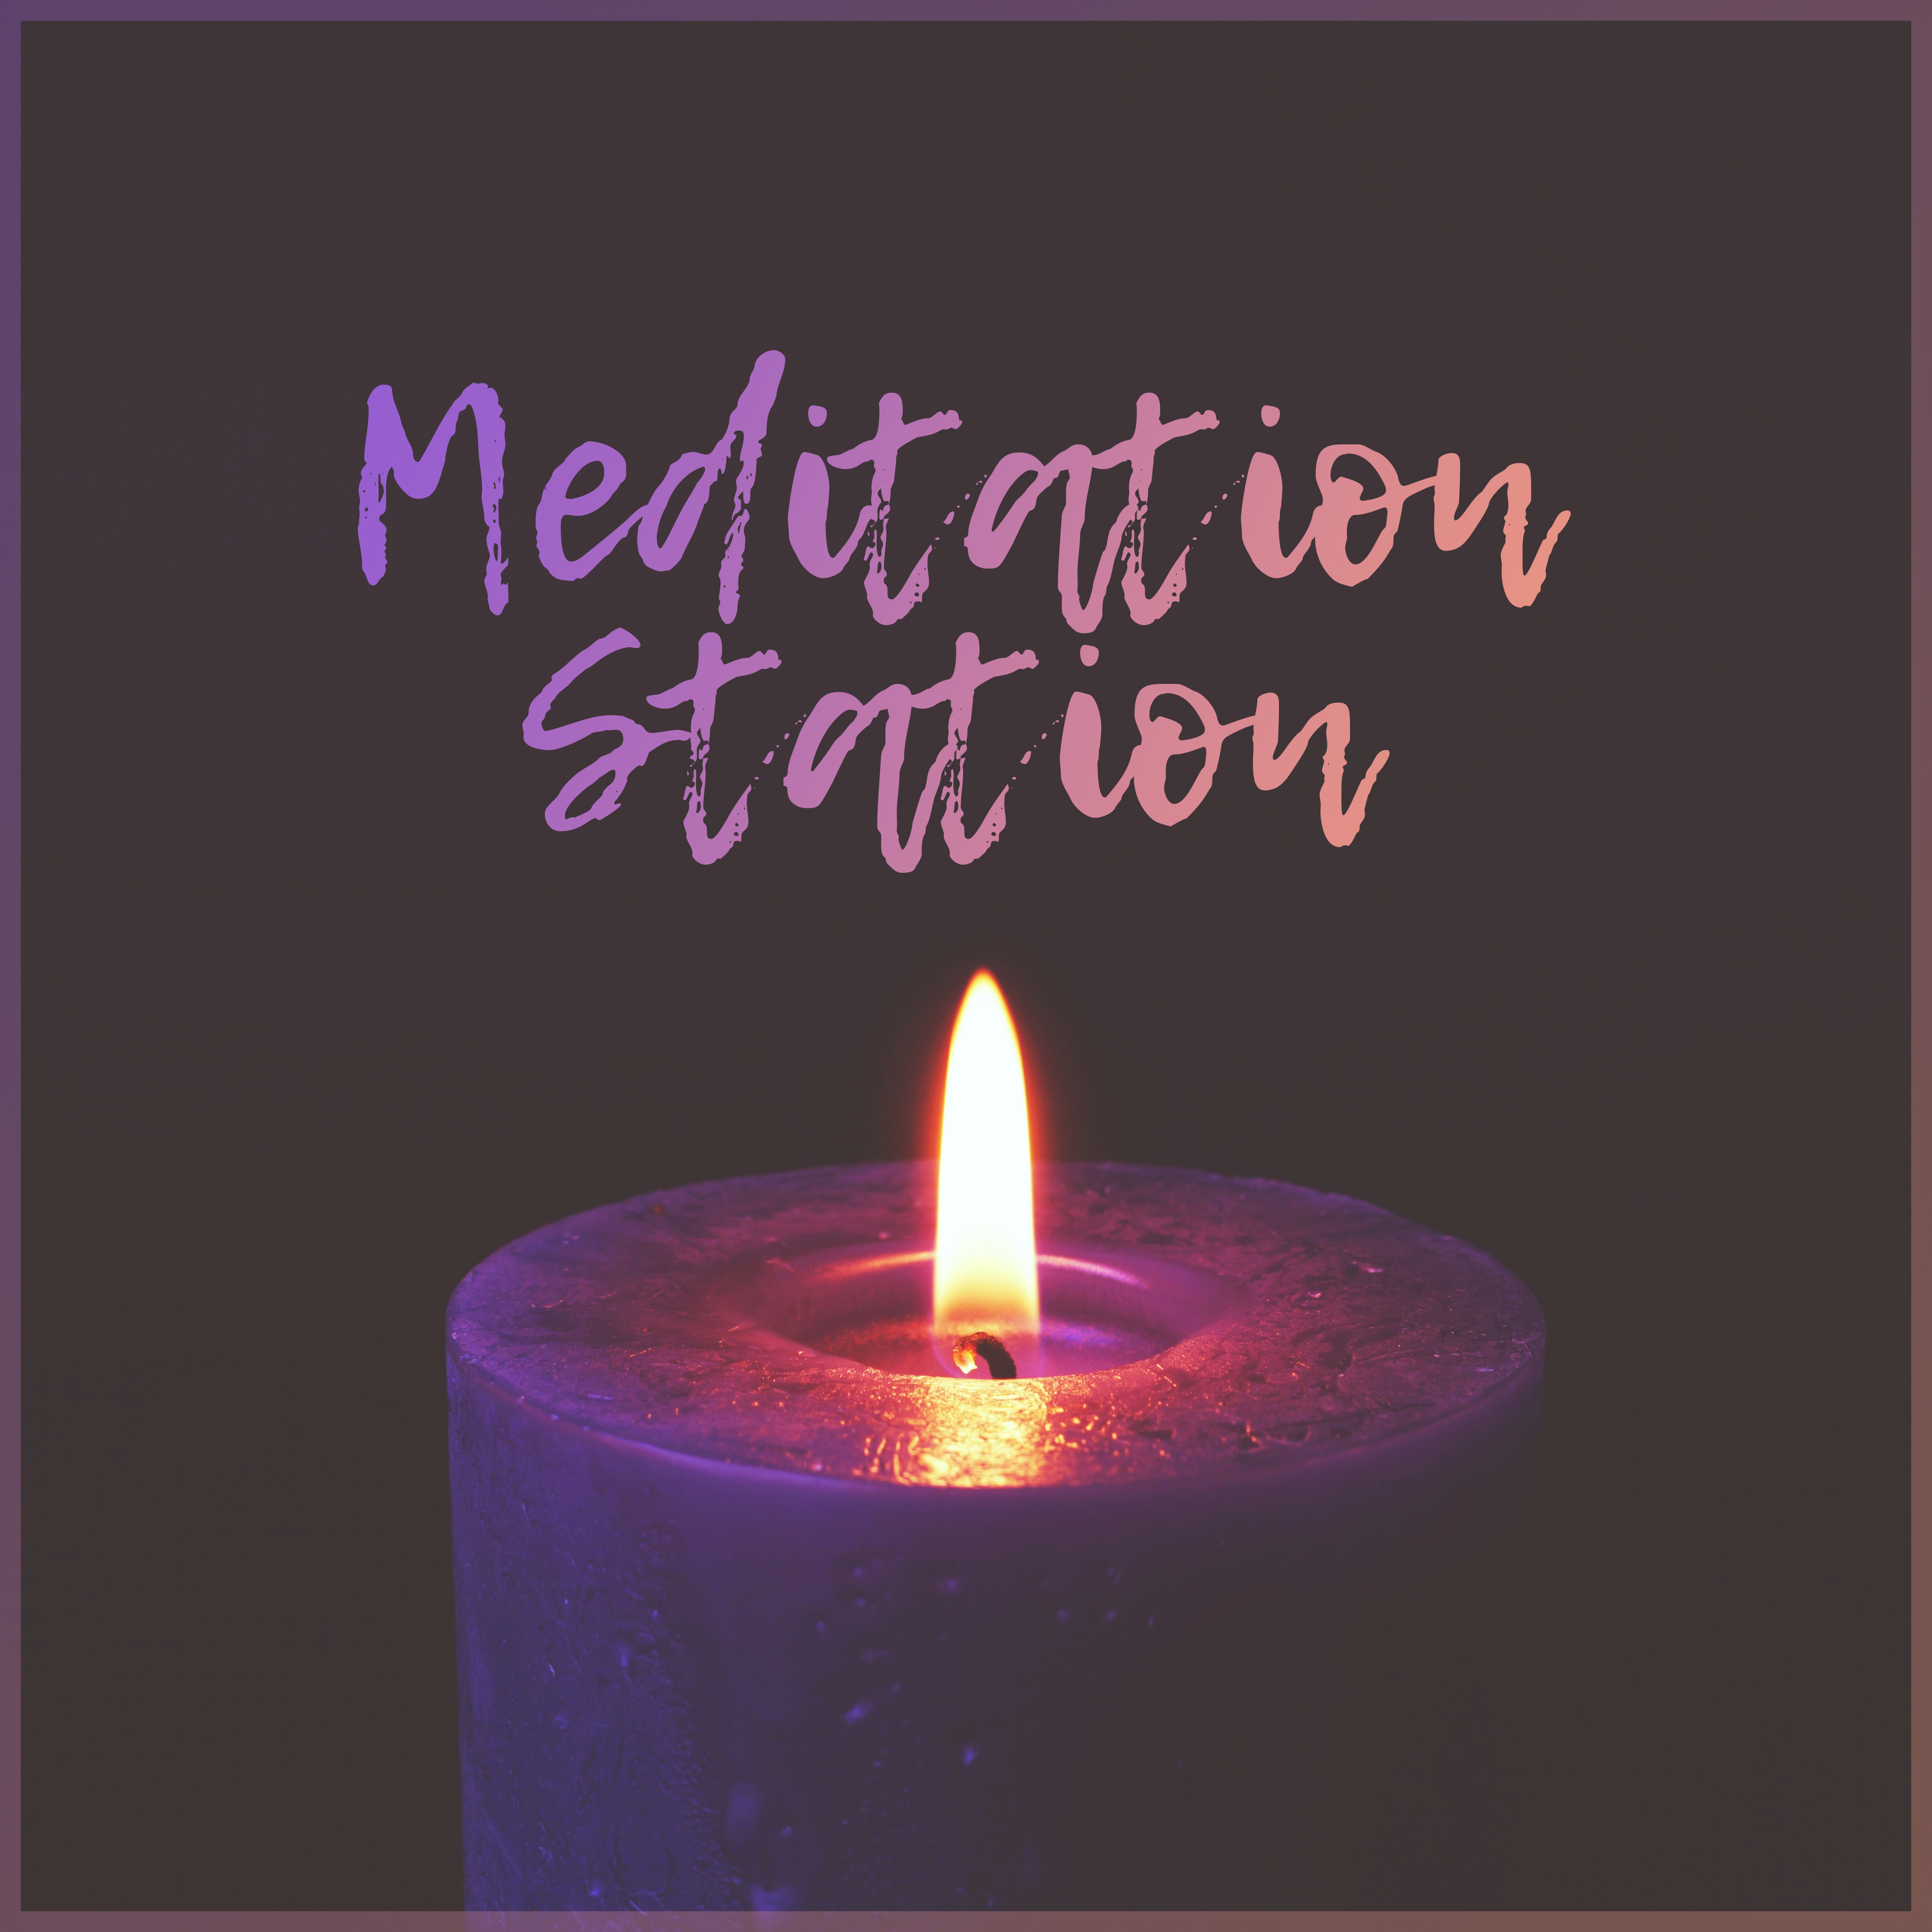 Meditation Station